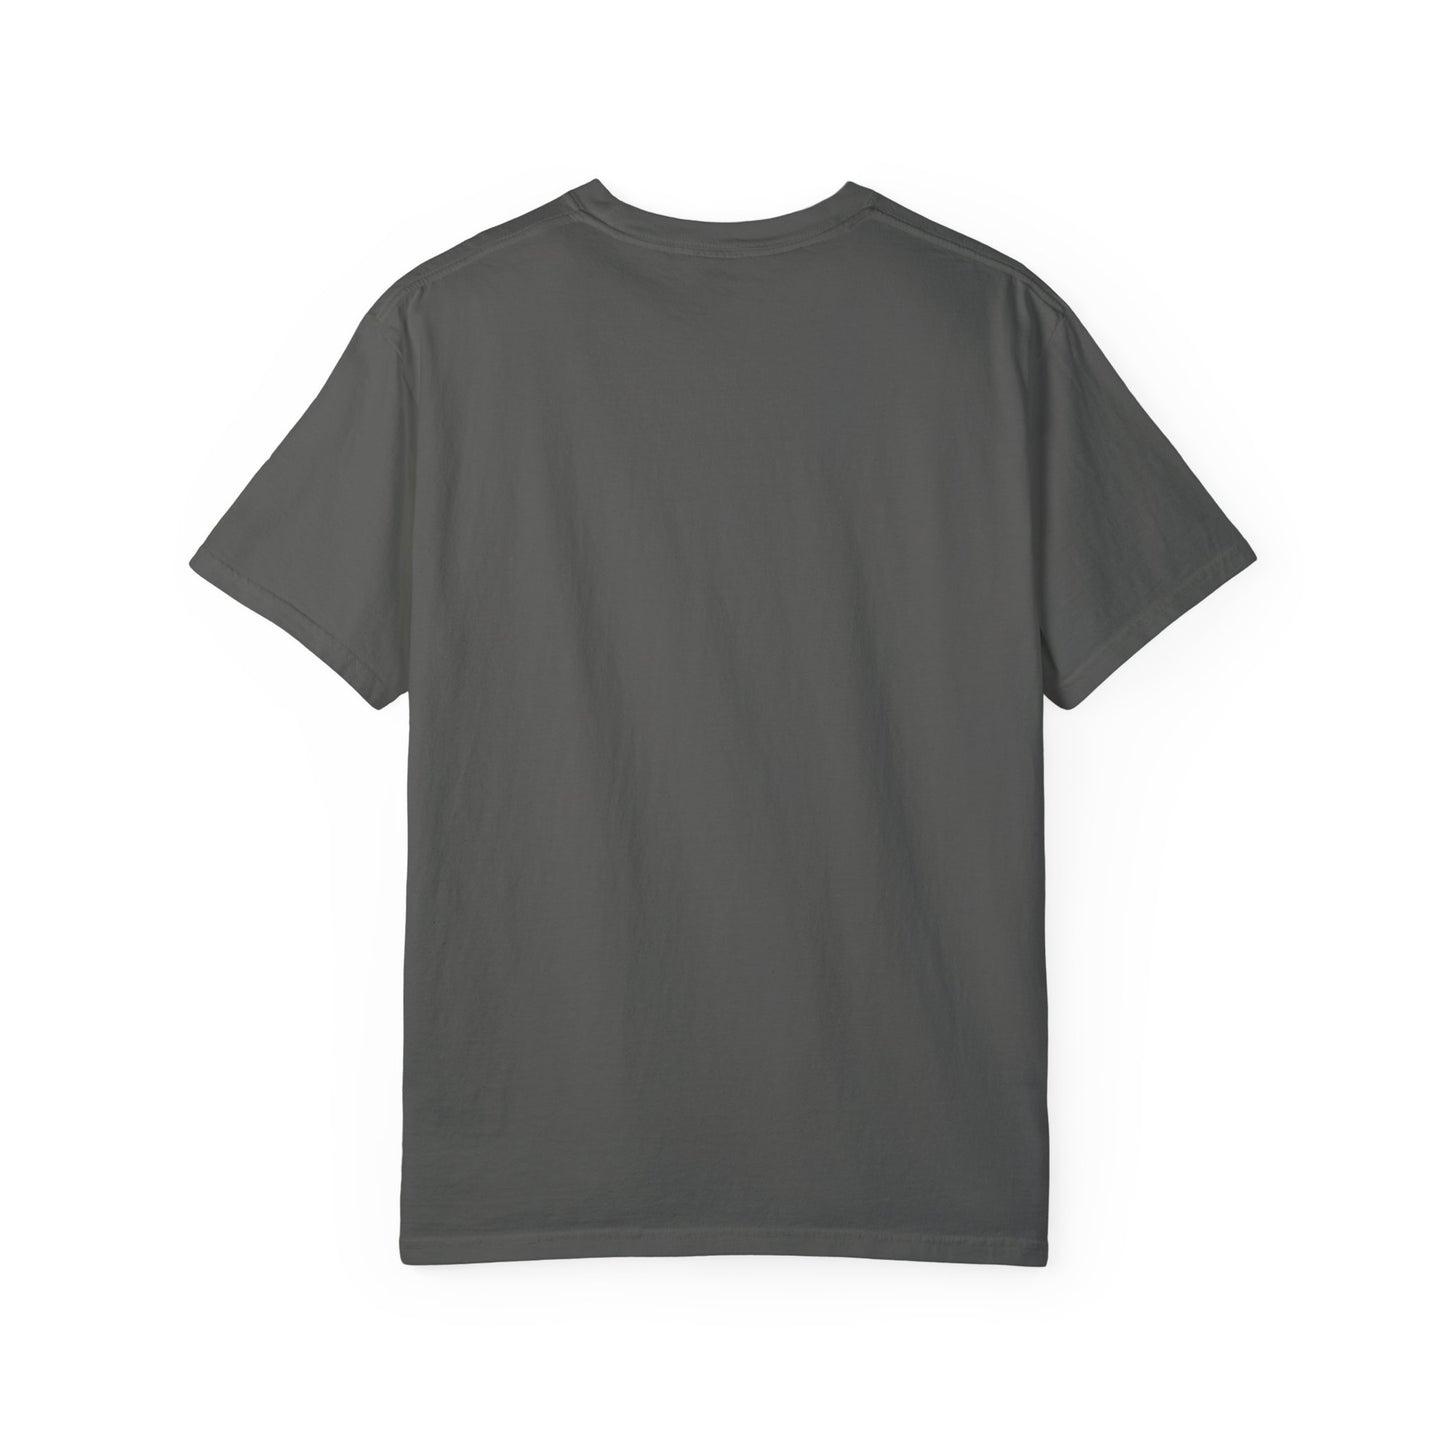 New Story Unisex Garment-Dyed T-shirt